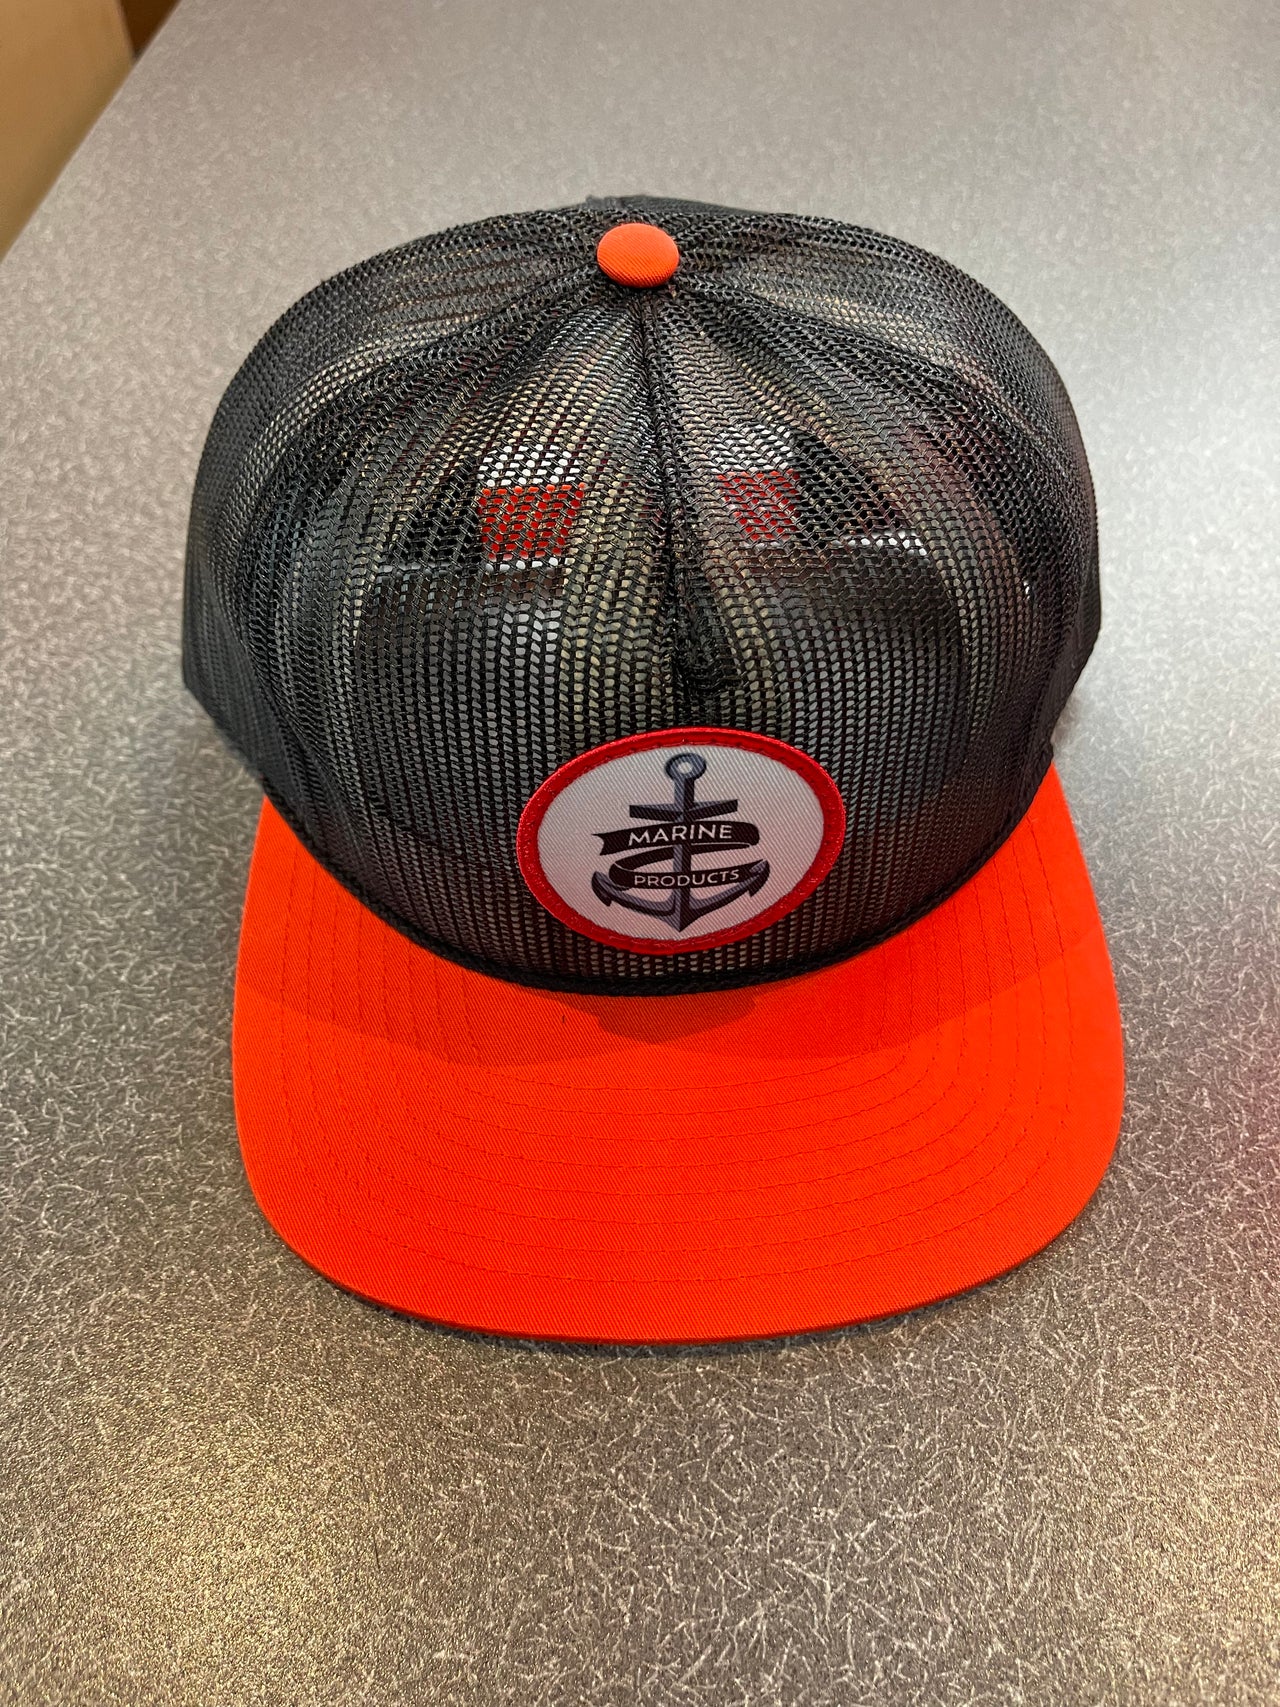 Marine Products Black/Orange Mesh Hat w/ Anchor Patch